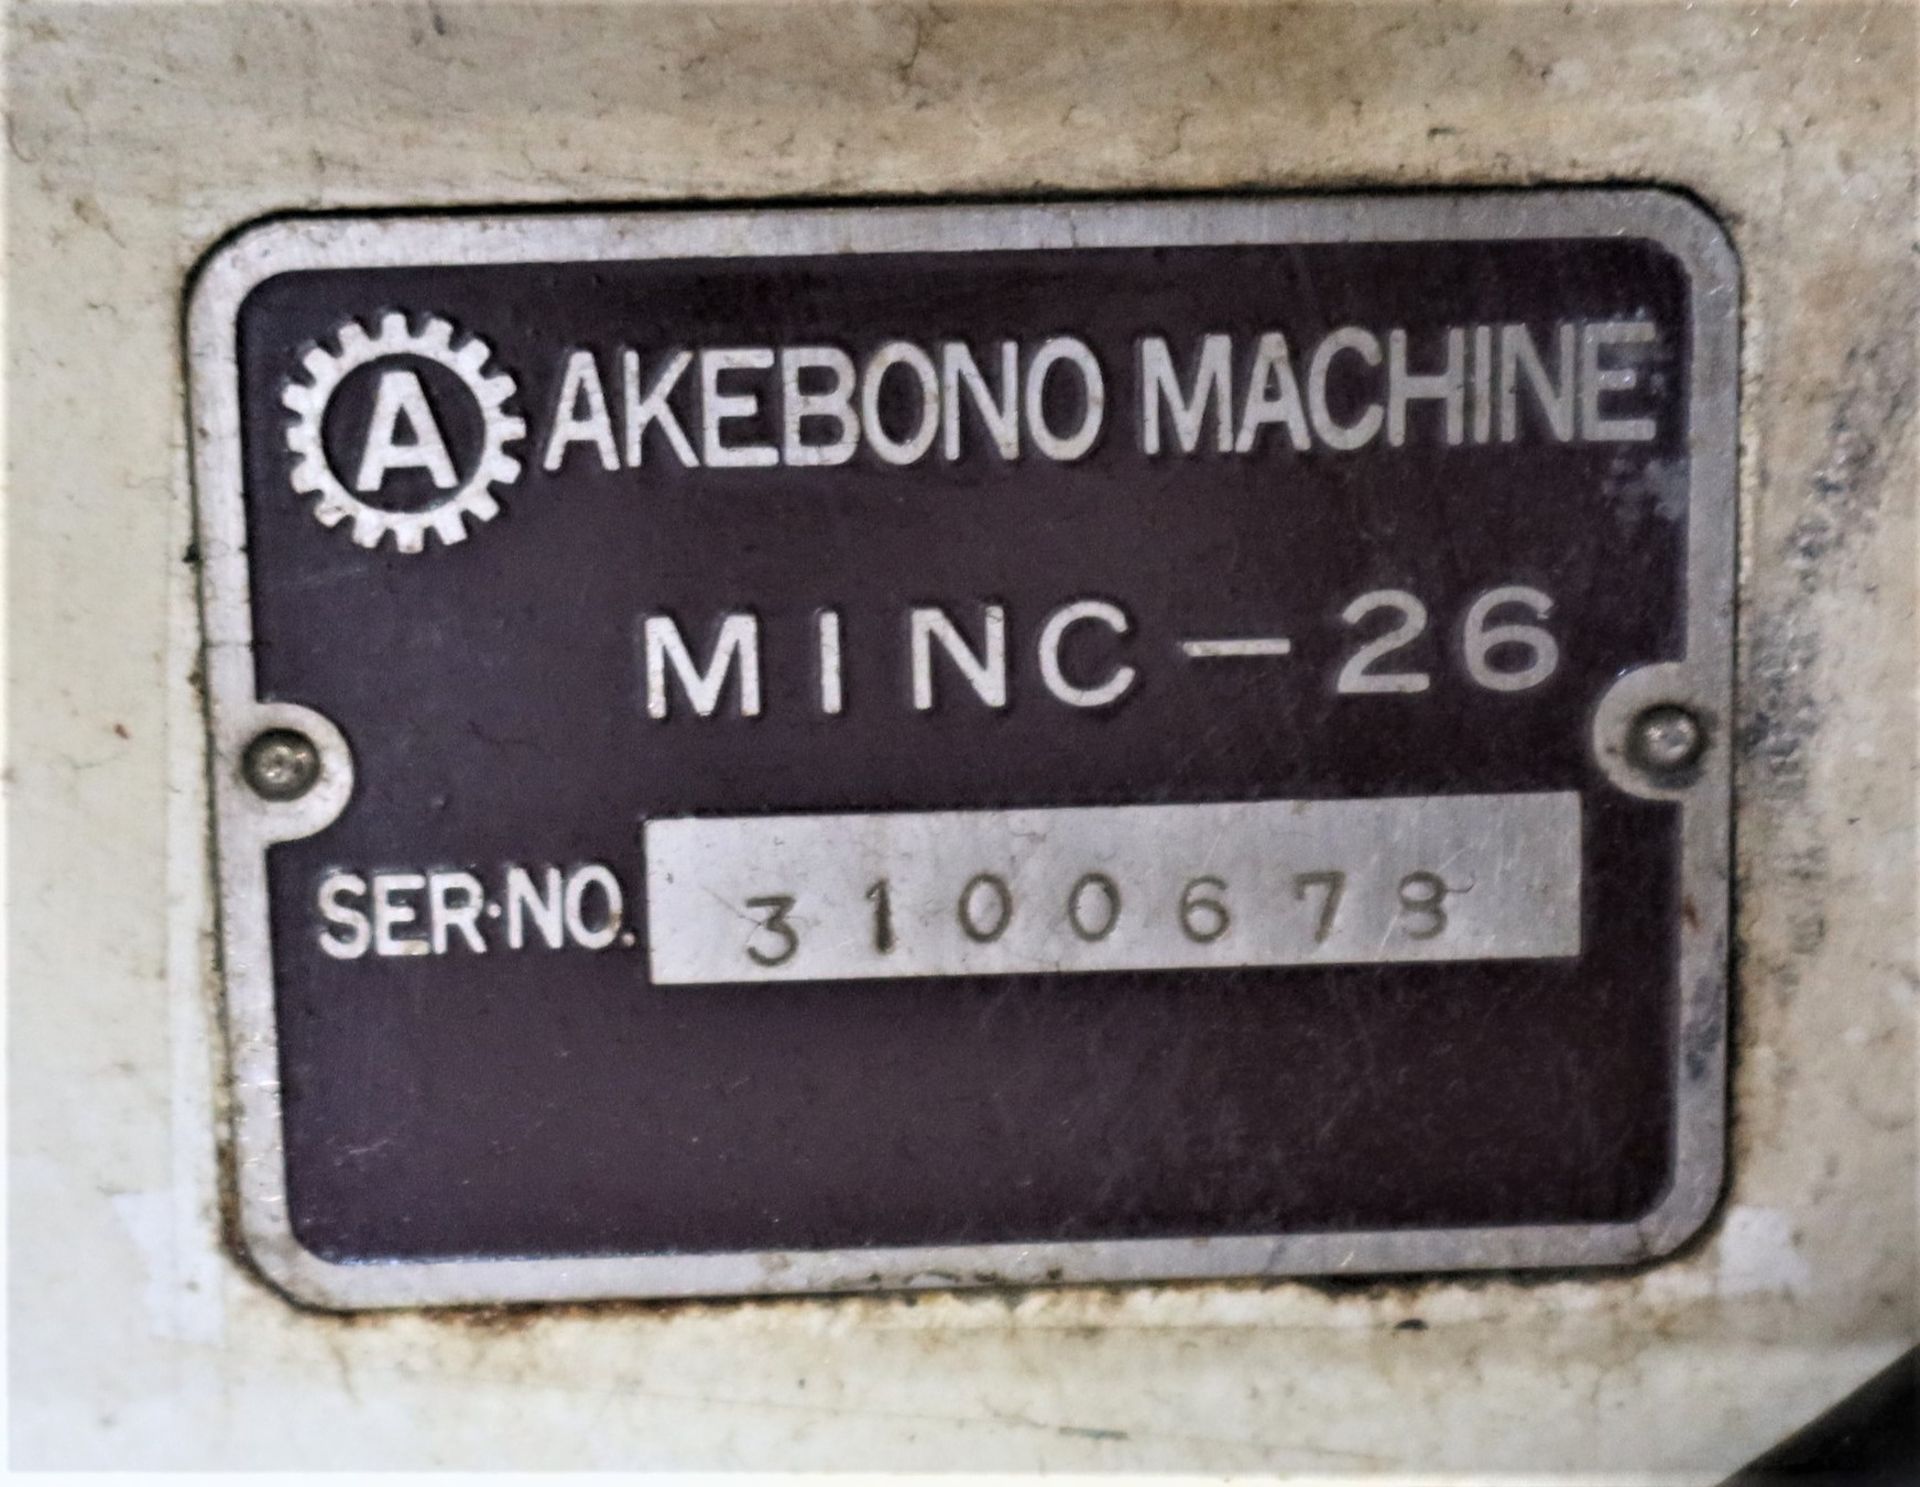 Akebono Minc-26 CNC Gang Type Lathe, S/N 3100678 - Image 4 of 5